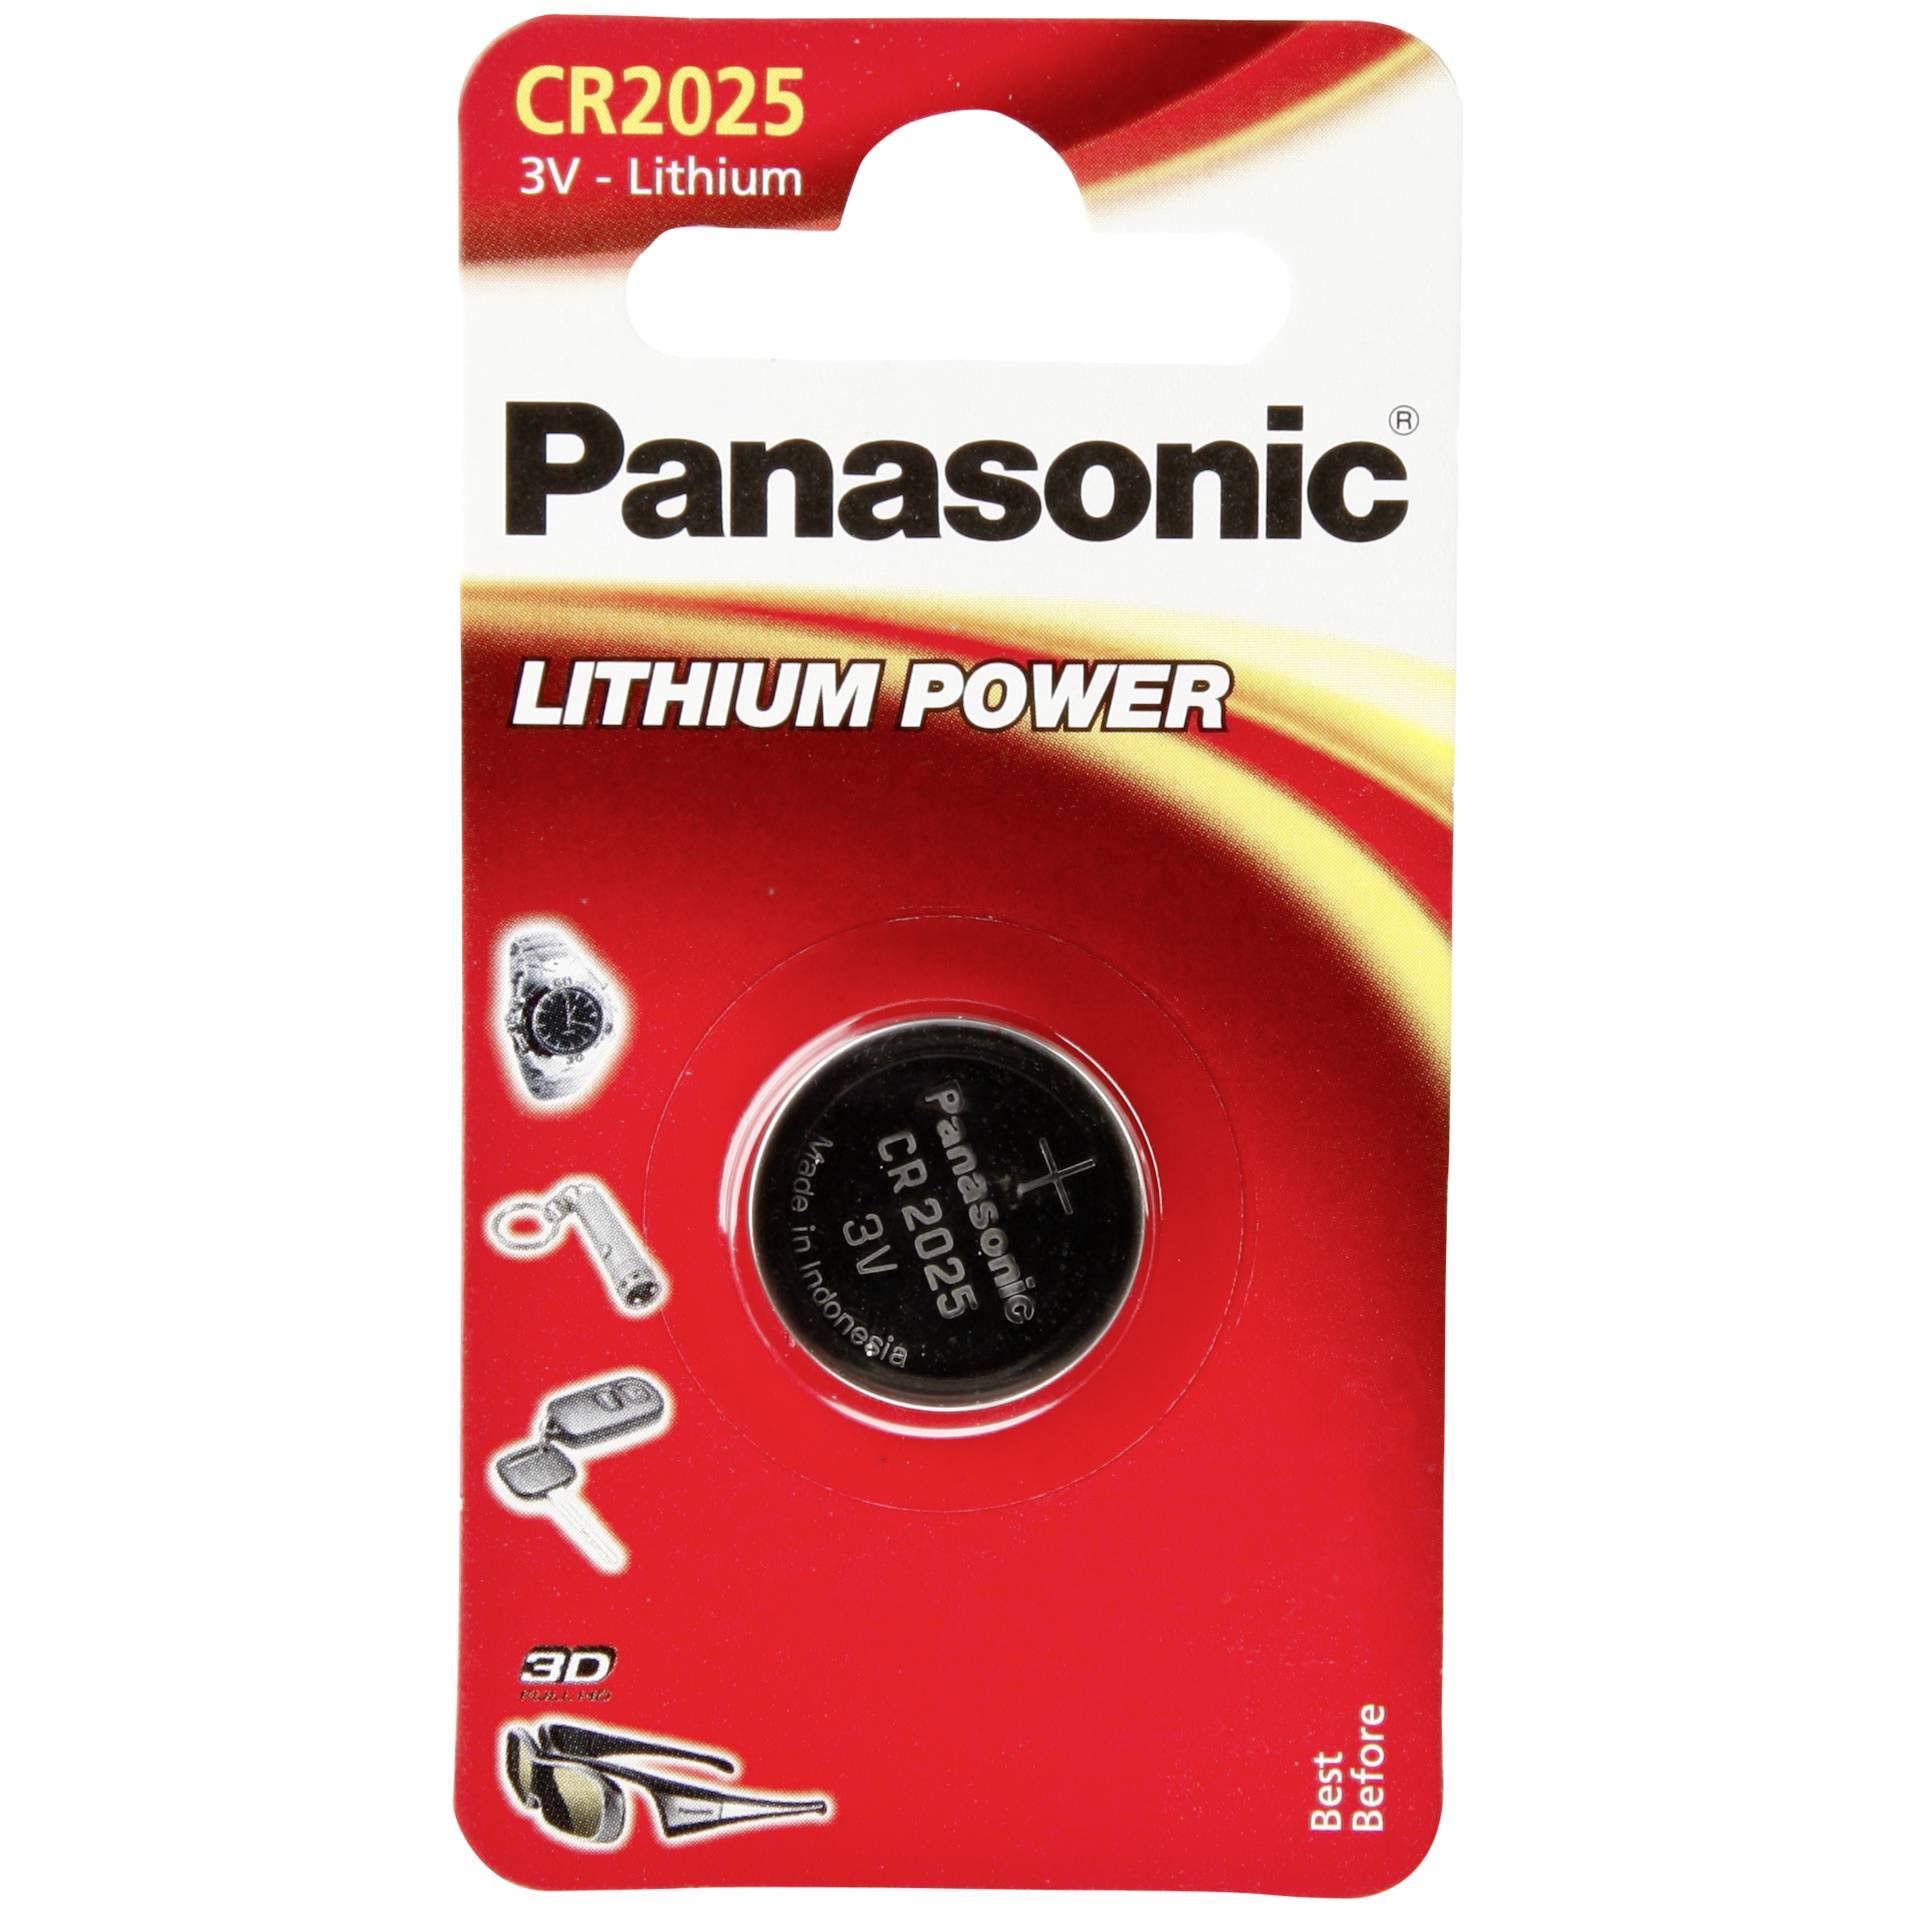 Panasonic CR2025 3V Lithium Battery